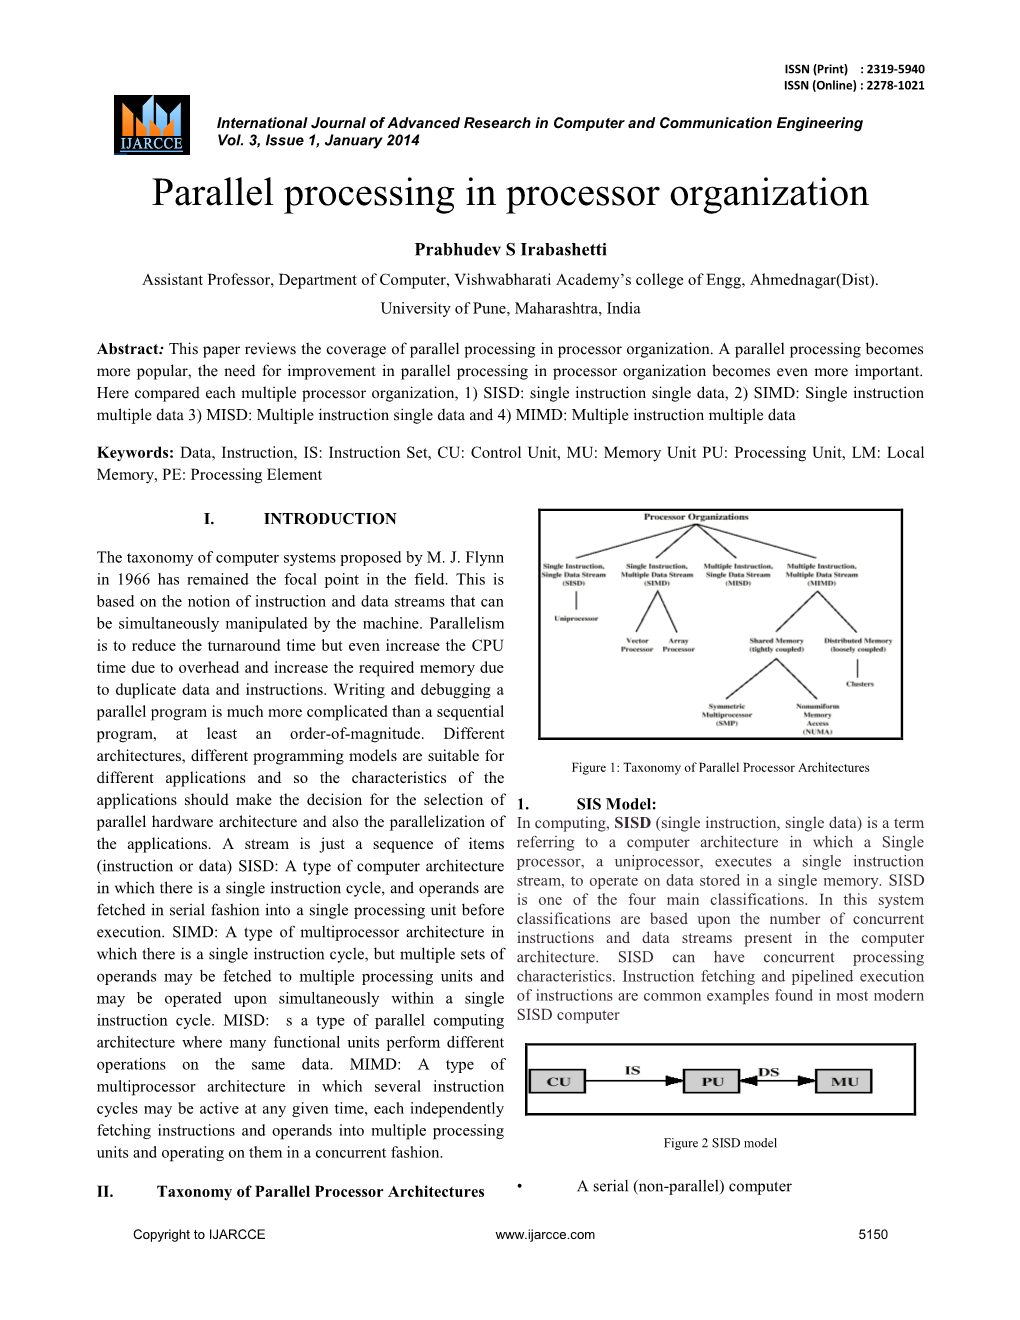 Parallel Processing in Processor Organization